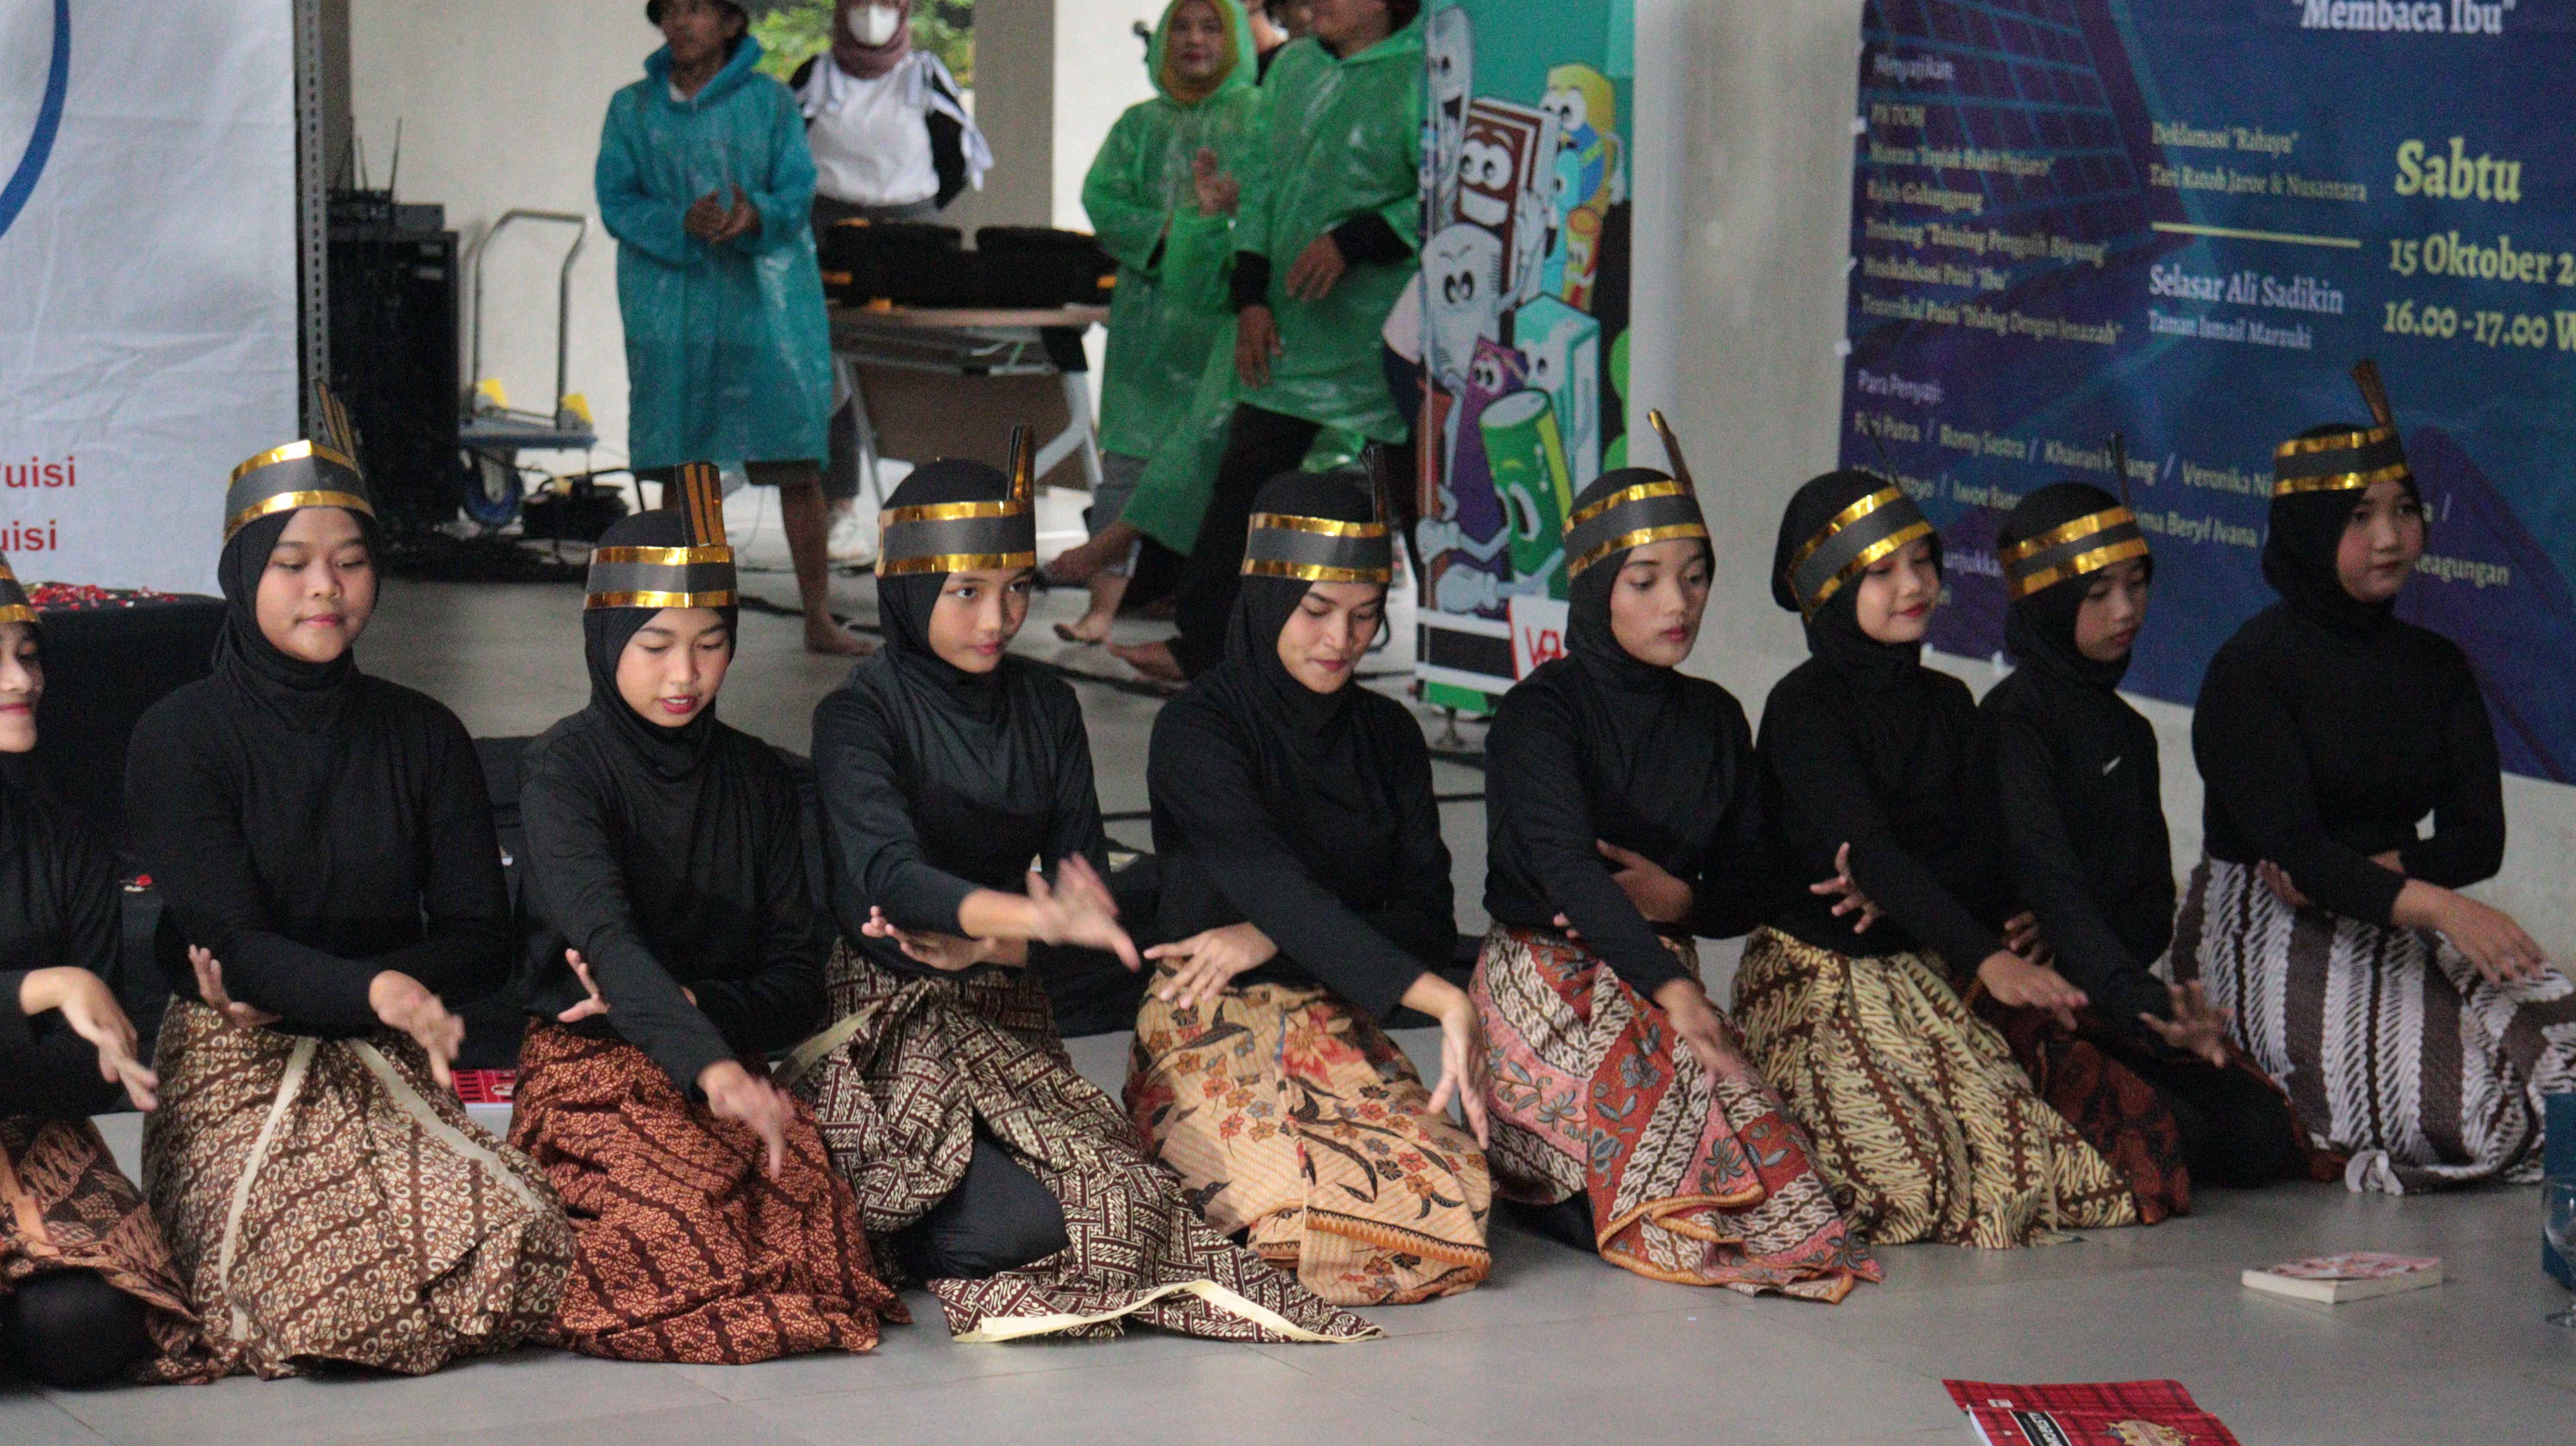 Senja Berpuisi Teater Jalanan Nusantara ( TJN)